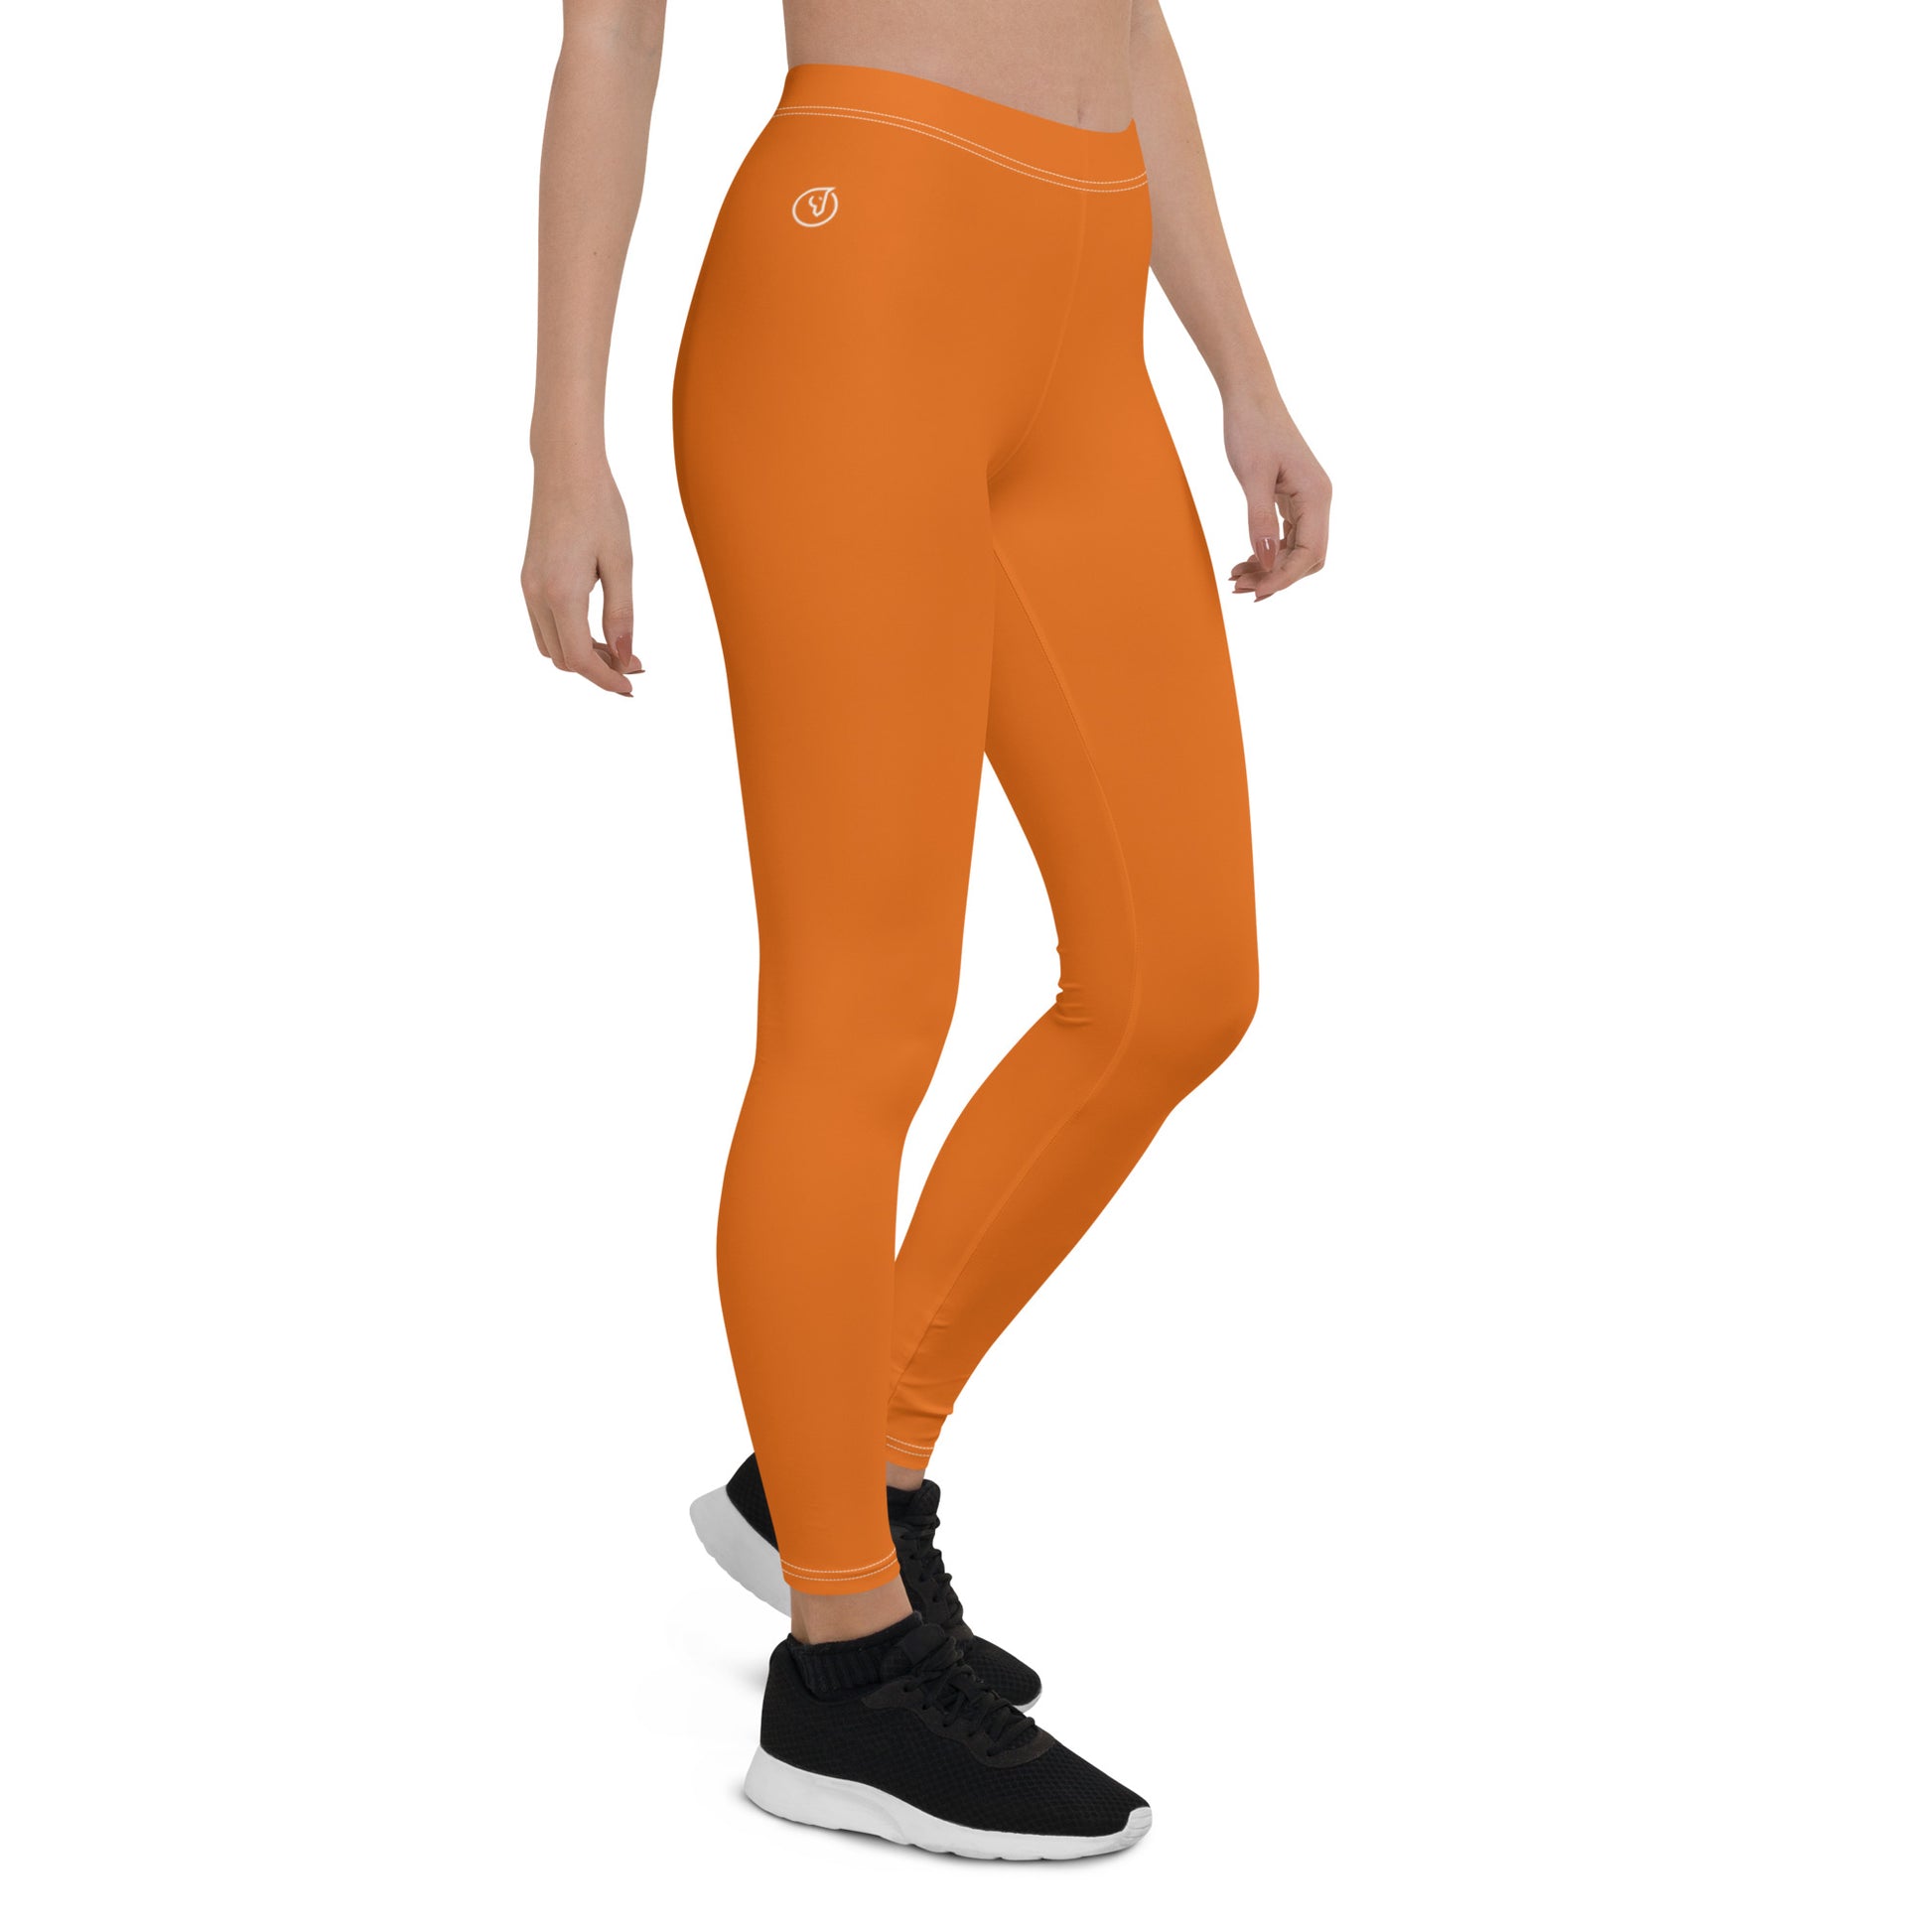 Humble Sportswear, women’s color match leggings, women’s leggings, 7/8th length leggings, women’s spandex leggings